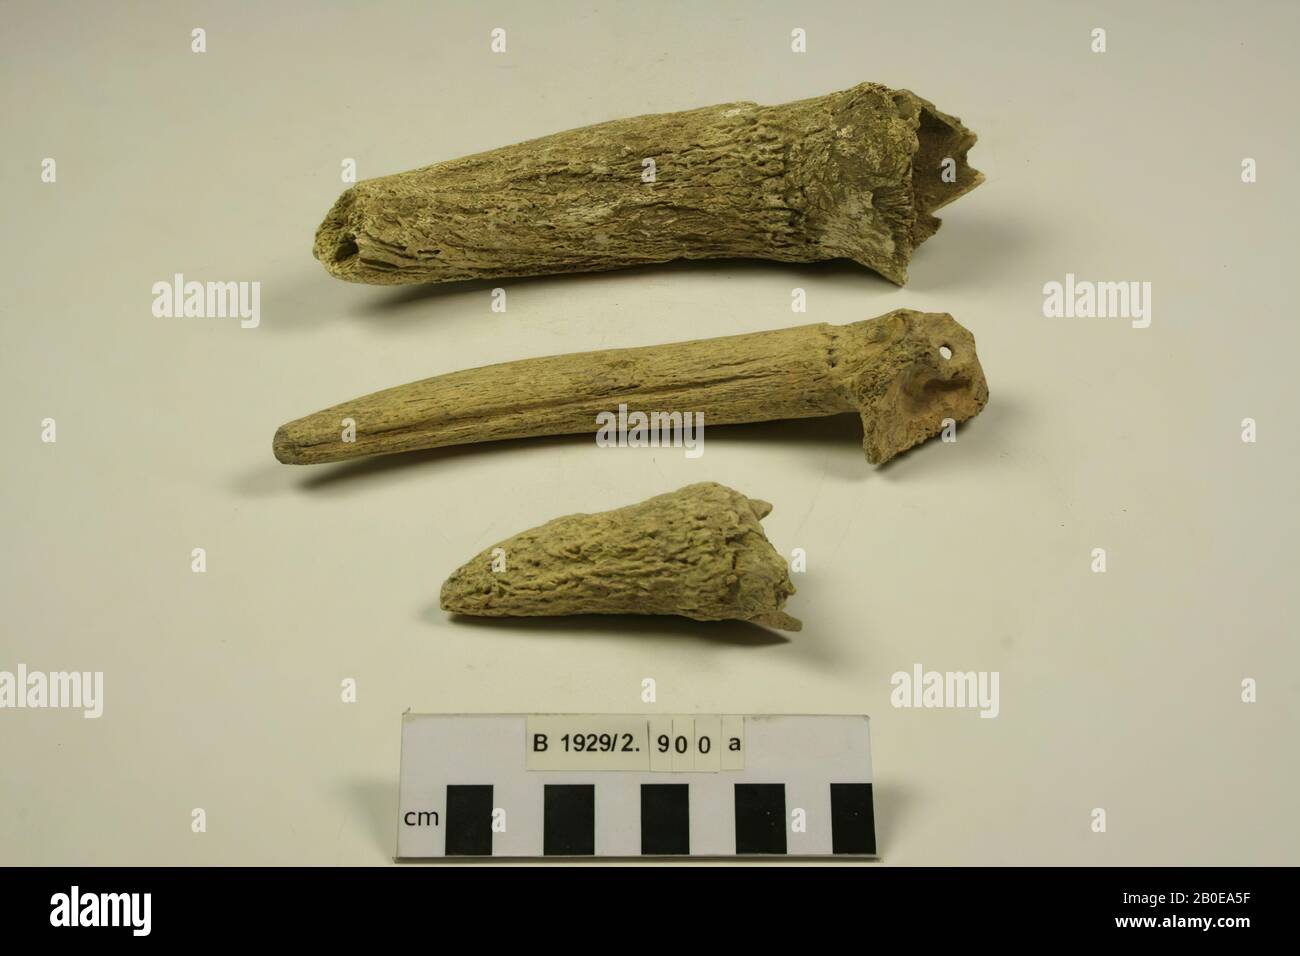 10 sachets with animal bones., Varia, animal bones, organic, bone, L 18.5 cm, Israel Stock Photo